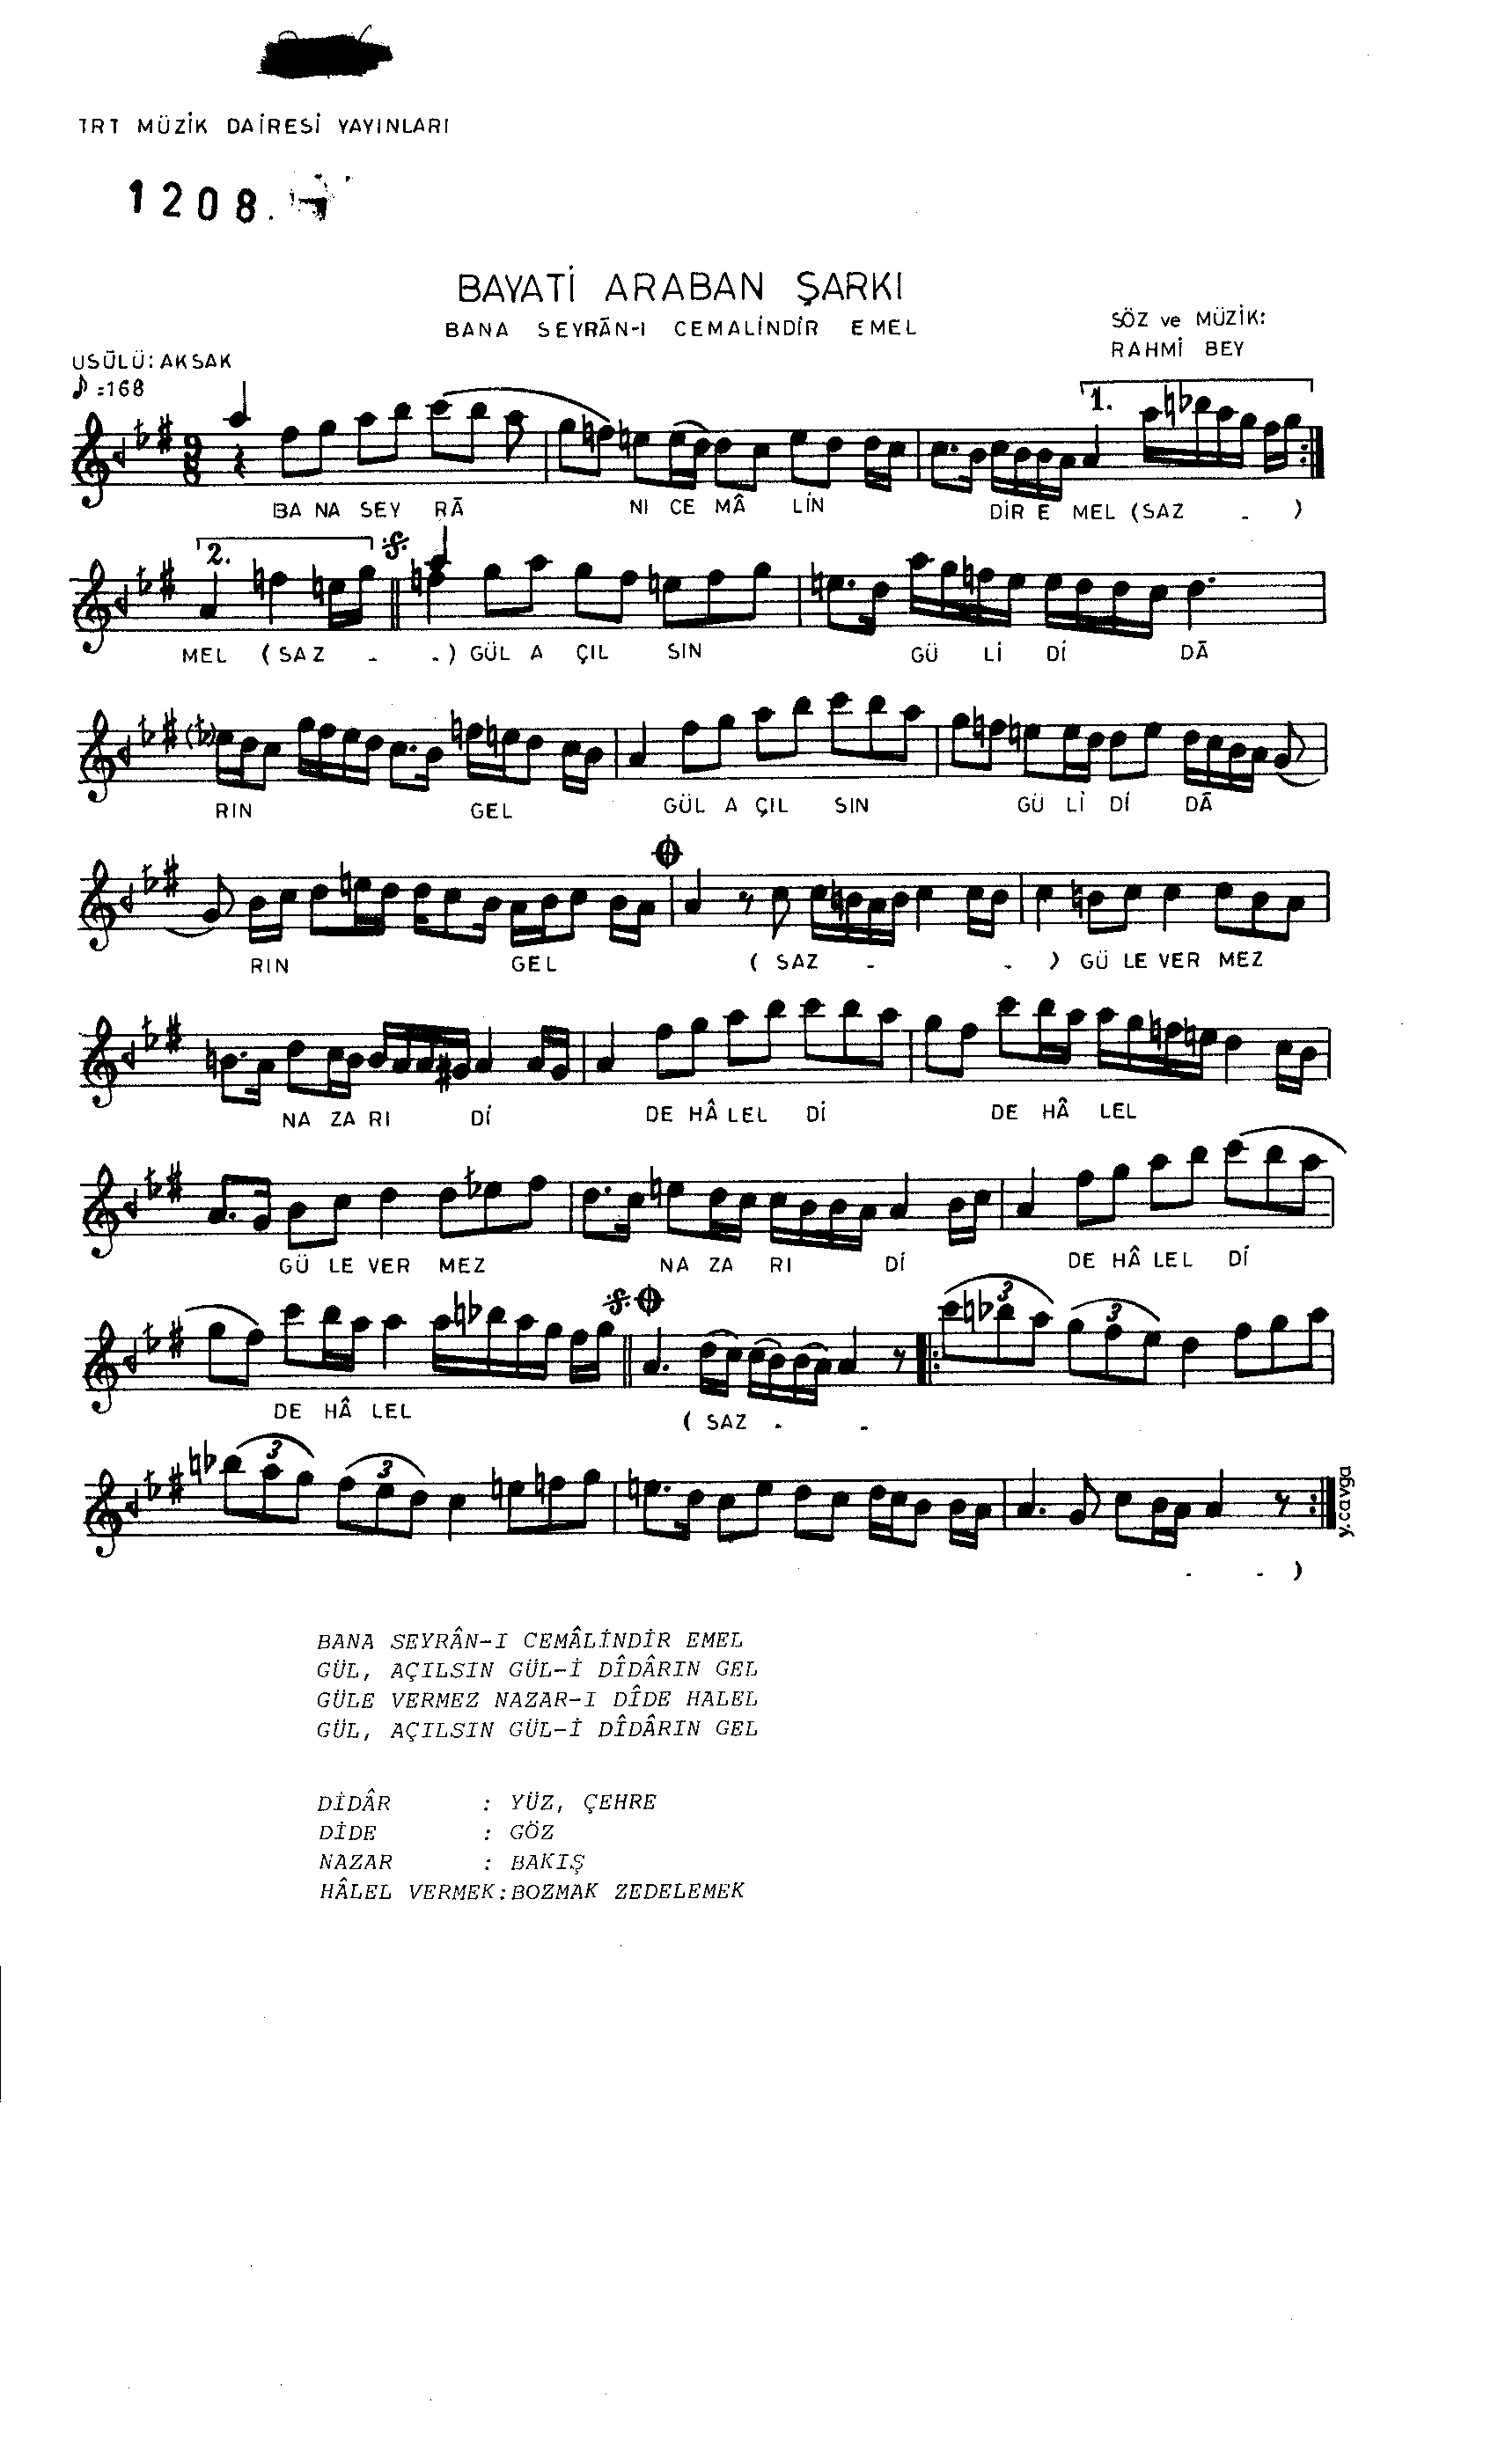 Beyâtî-Arabân - Şarkı - Rahmi Bey - Sayfa 1